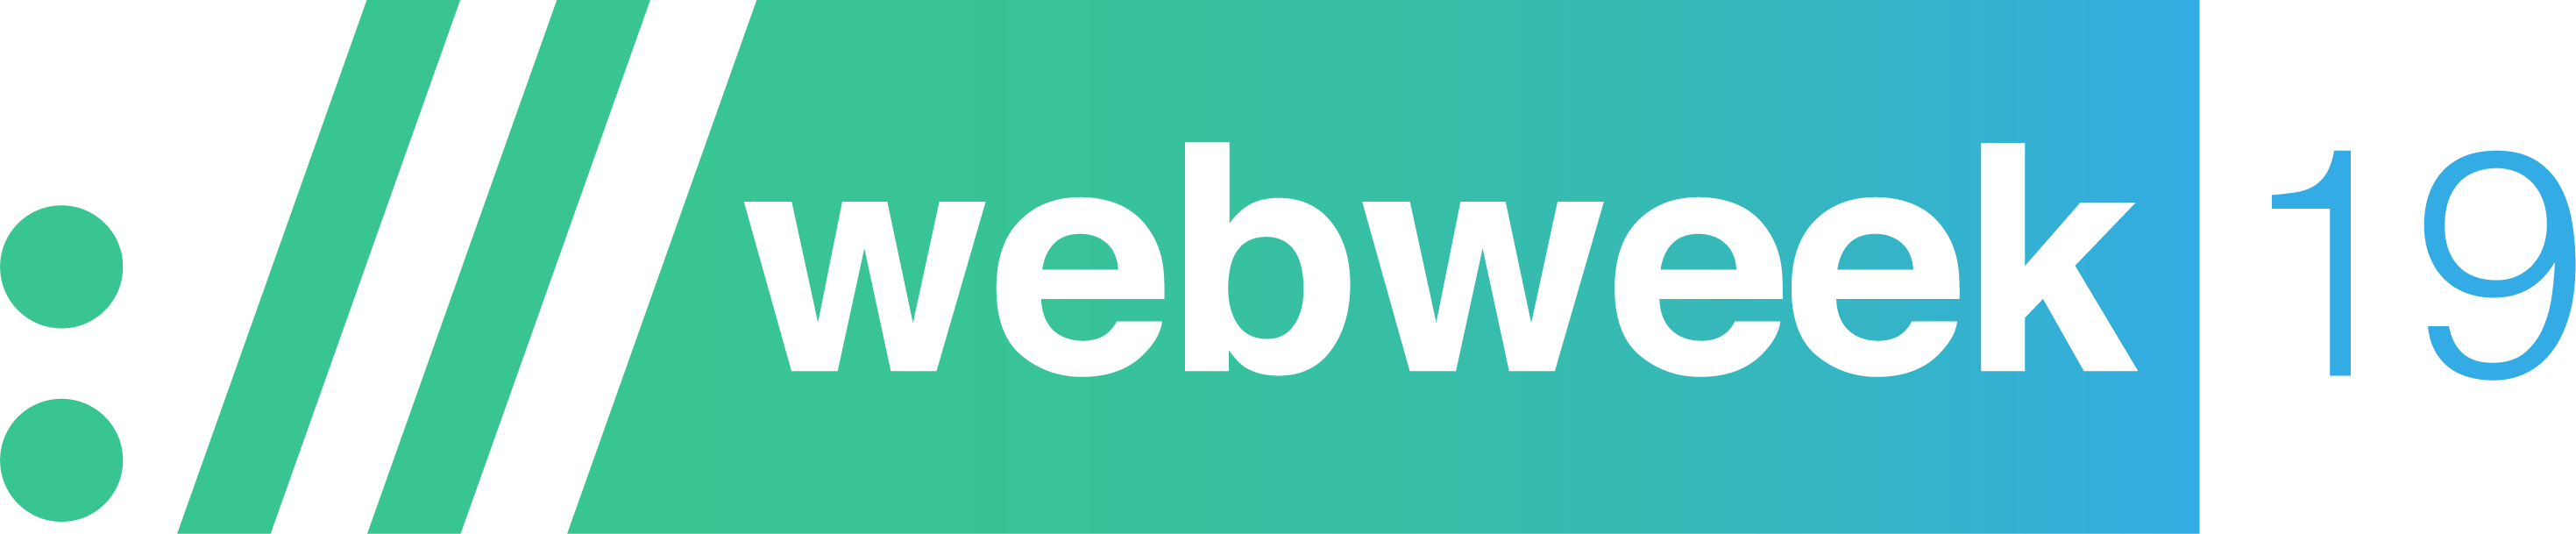 Webweek Rhein-Main 2019